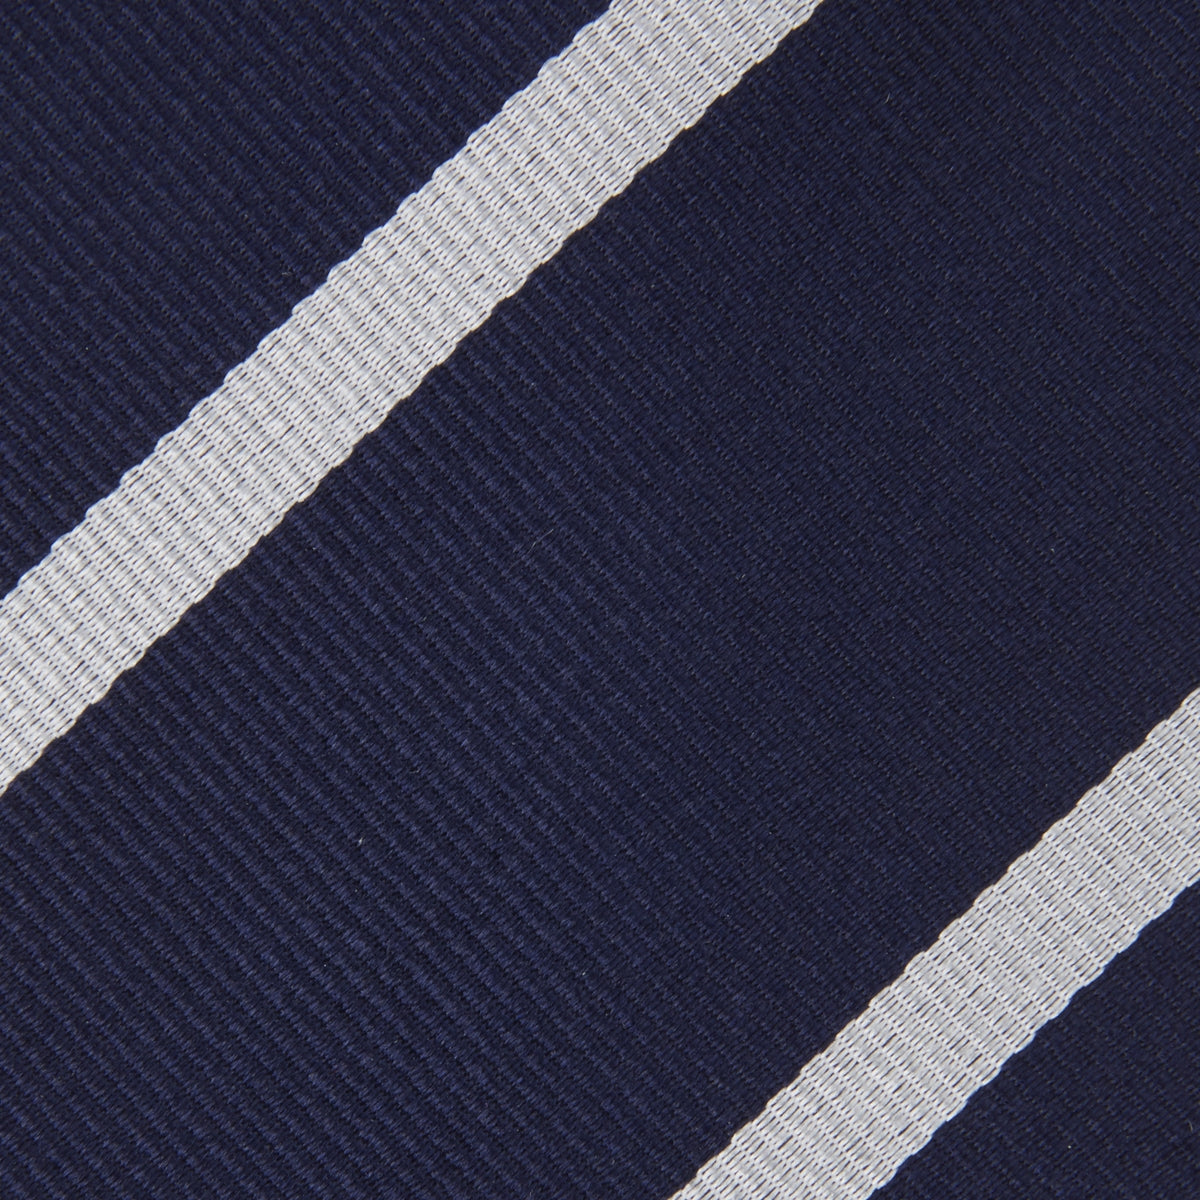 Seven-Fold Navy and White Blazer Stripe Repp Silk Tie